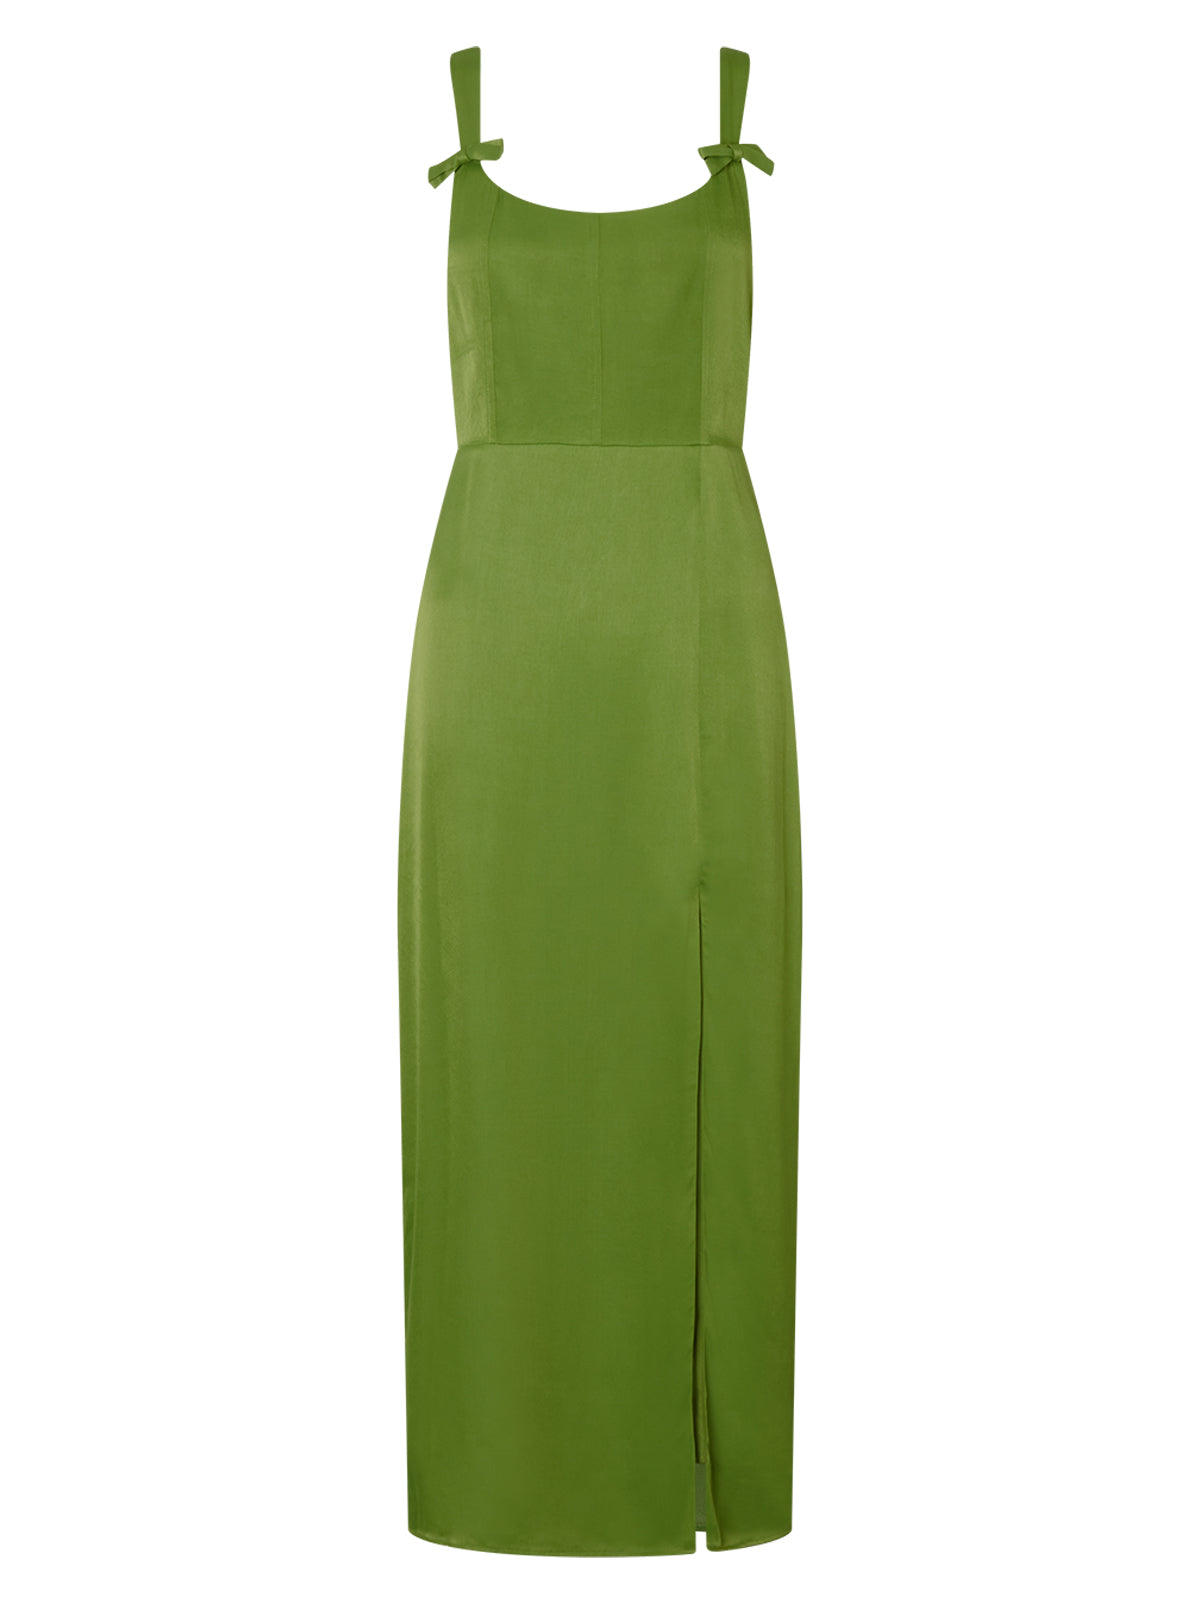 Rosalind Kiwi Green Satin Midi Dress By KITRI Studio